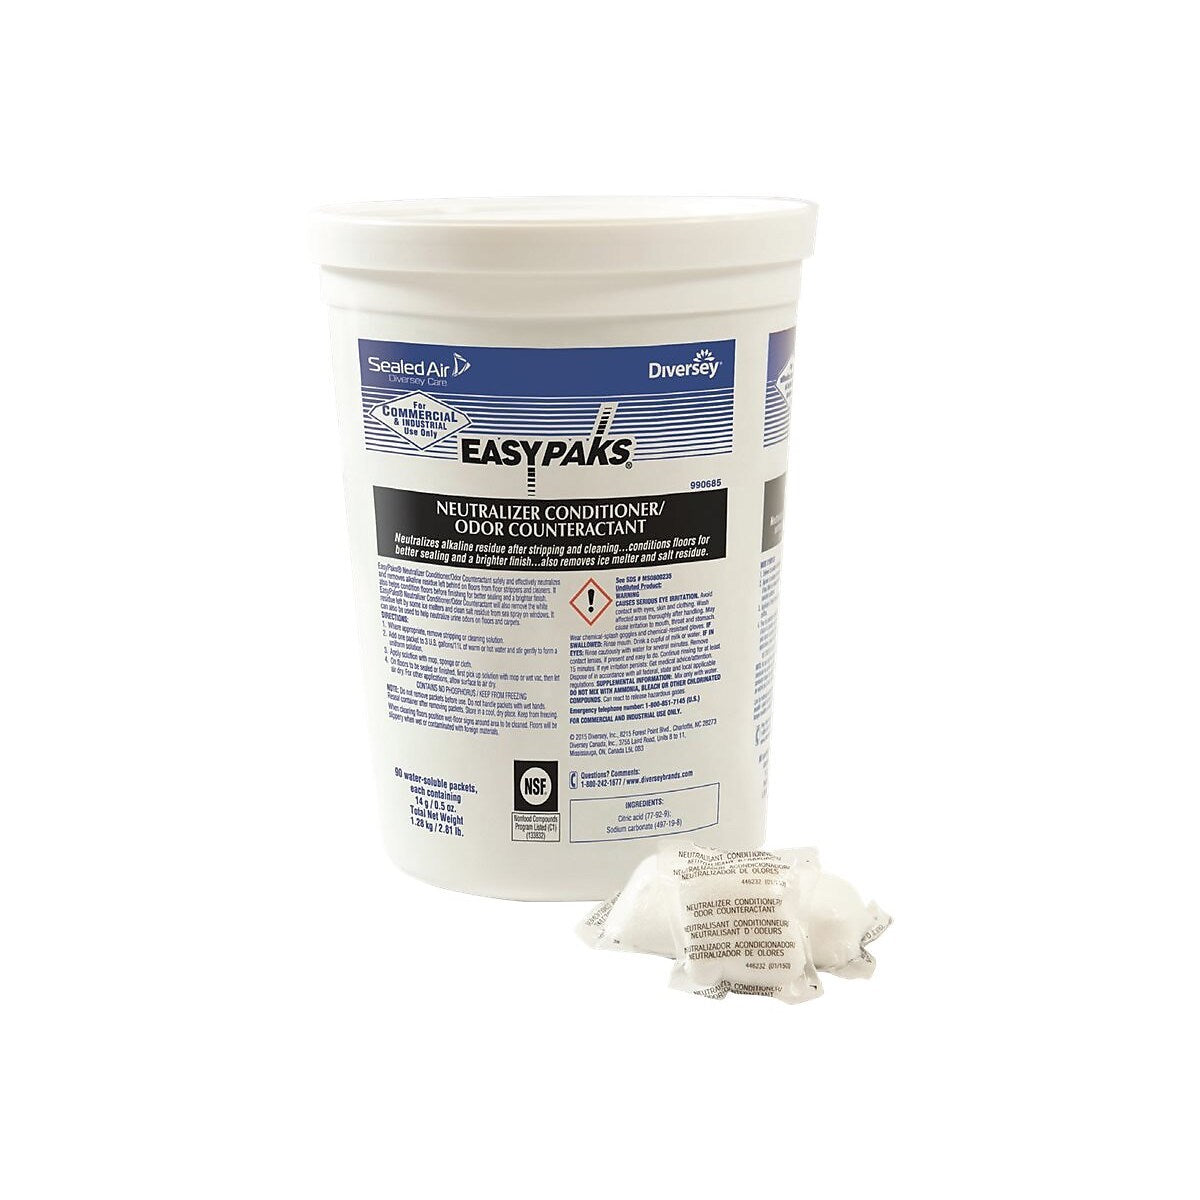 Easy Paks Neutralizer/Conditioner Powder-To-Liquid Deodorizer, 90 Packets/Tub, 2 Tubs/Carton